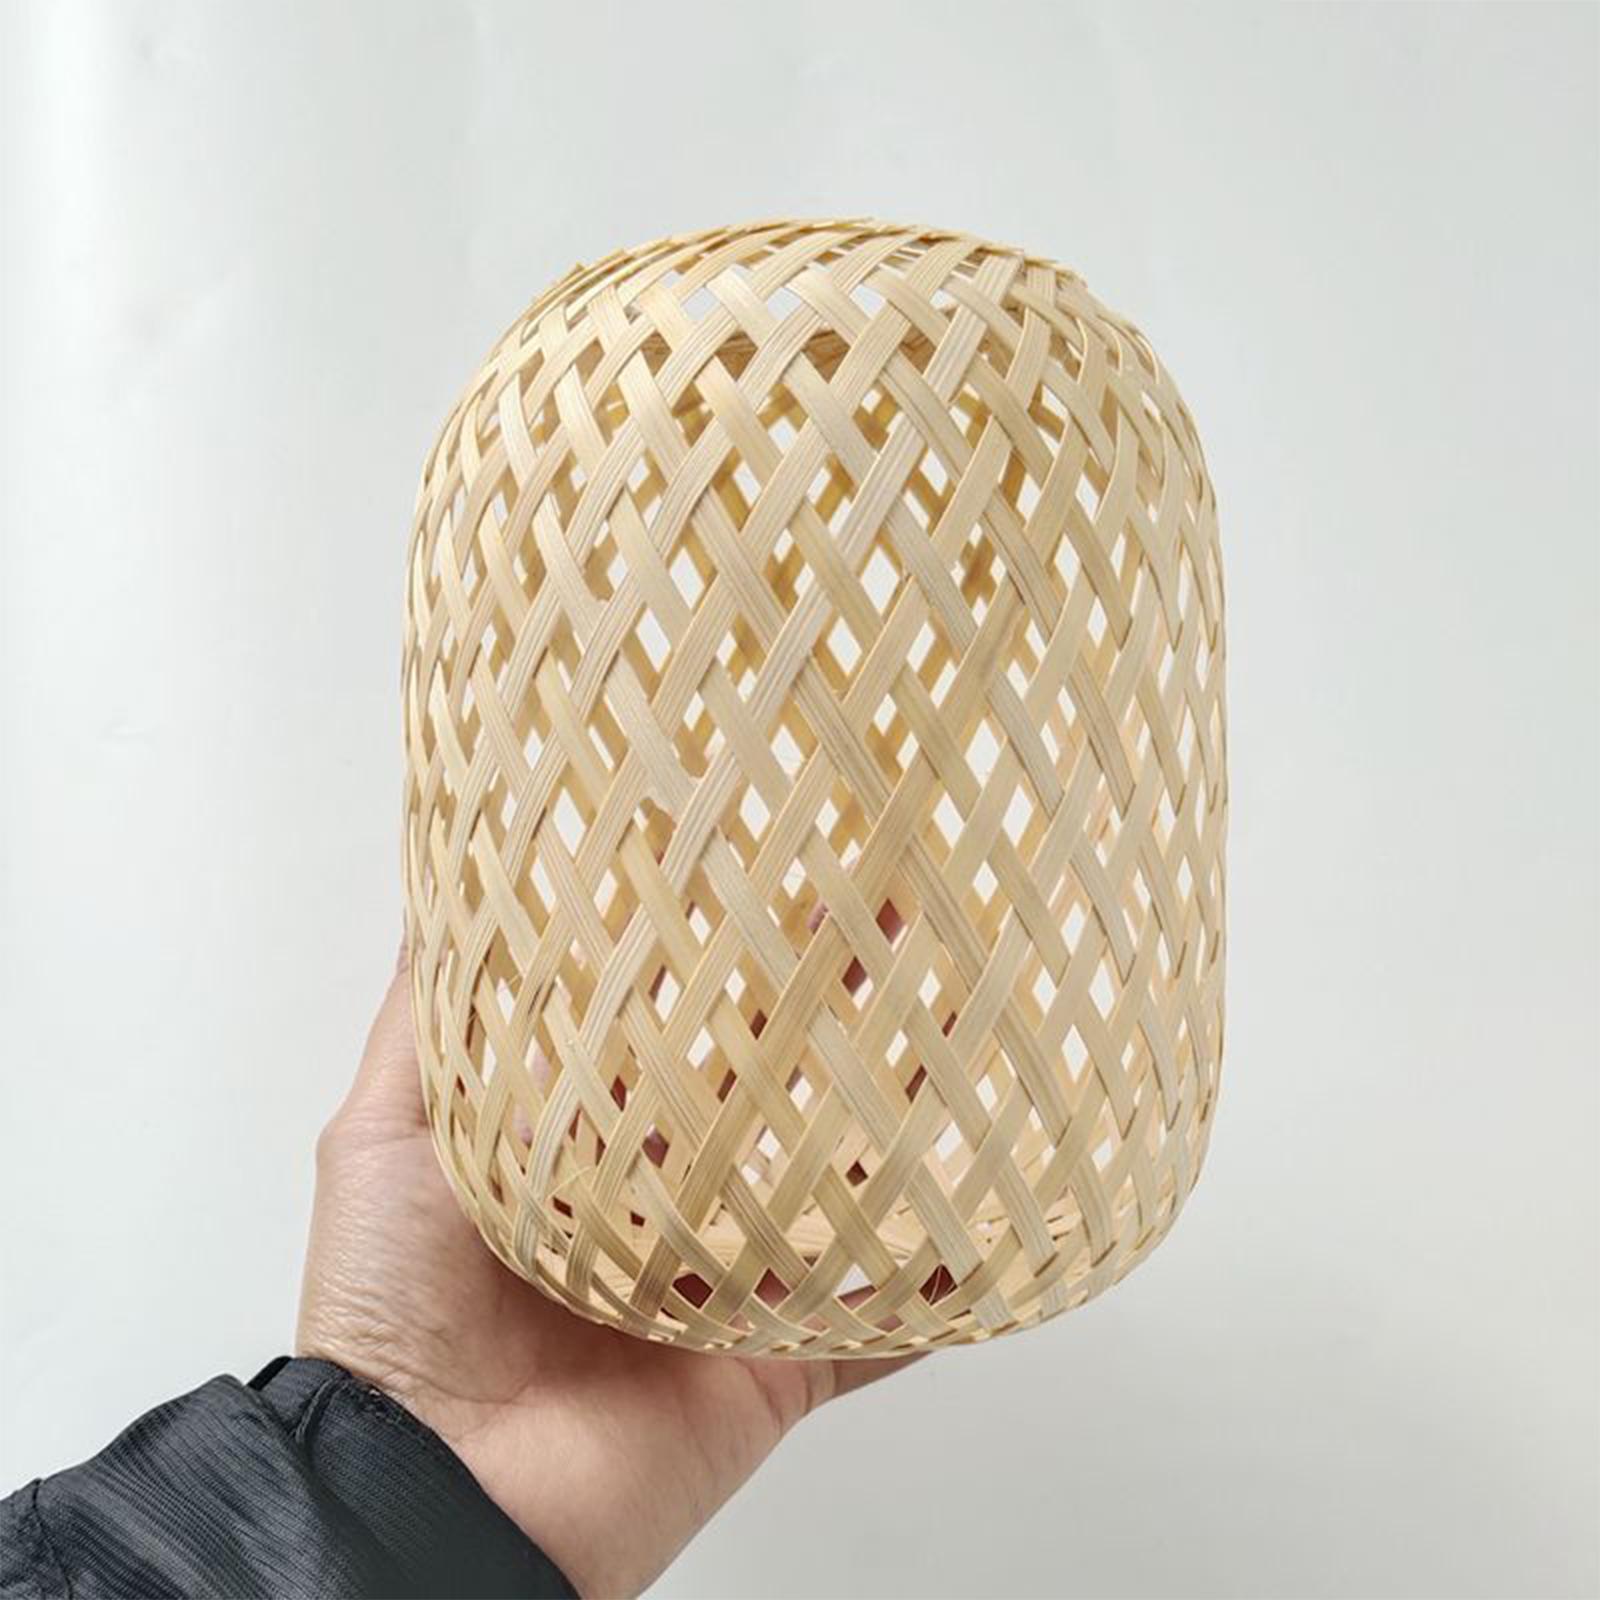 Bamboo Handwoven Lamp Shade Chandelier Light Cover for Living Room Cafe Bar